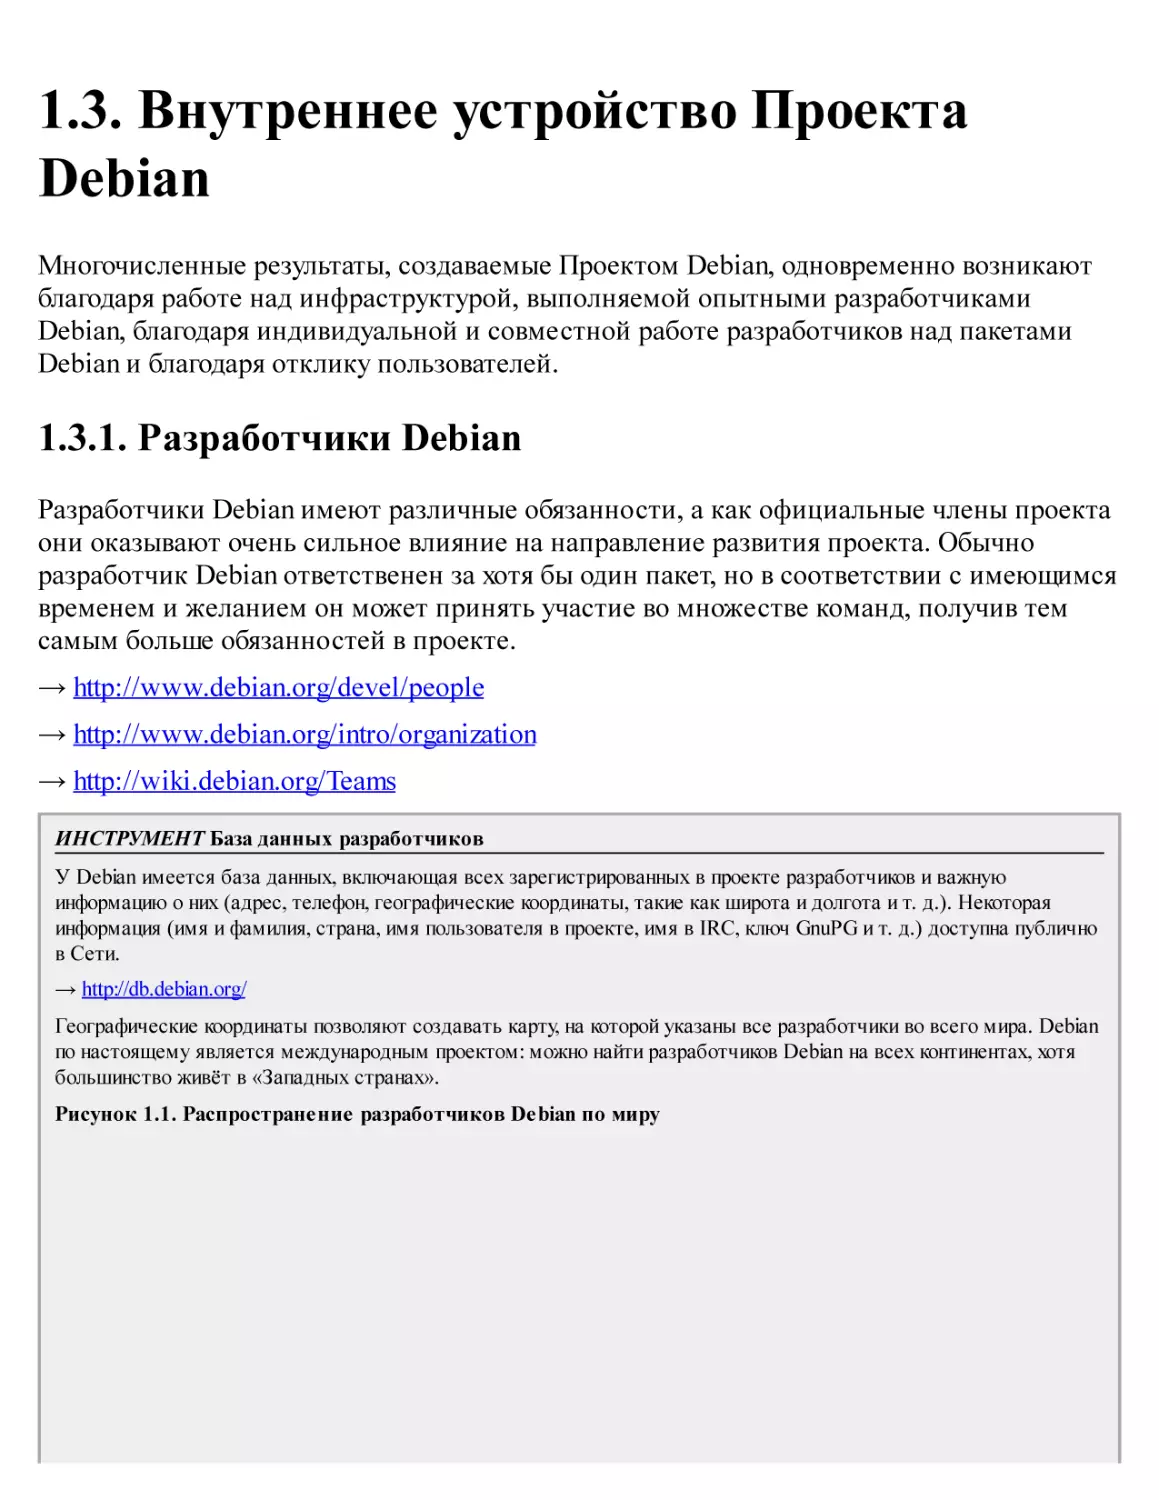 1.3. Внутреннее устройство Проекта Debian
1.3.1. Разработчики Debian